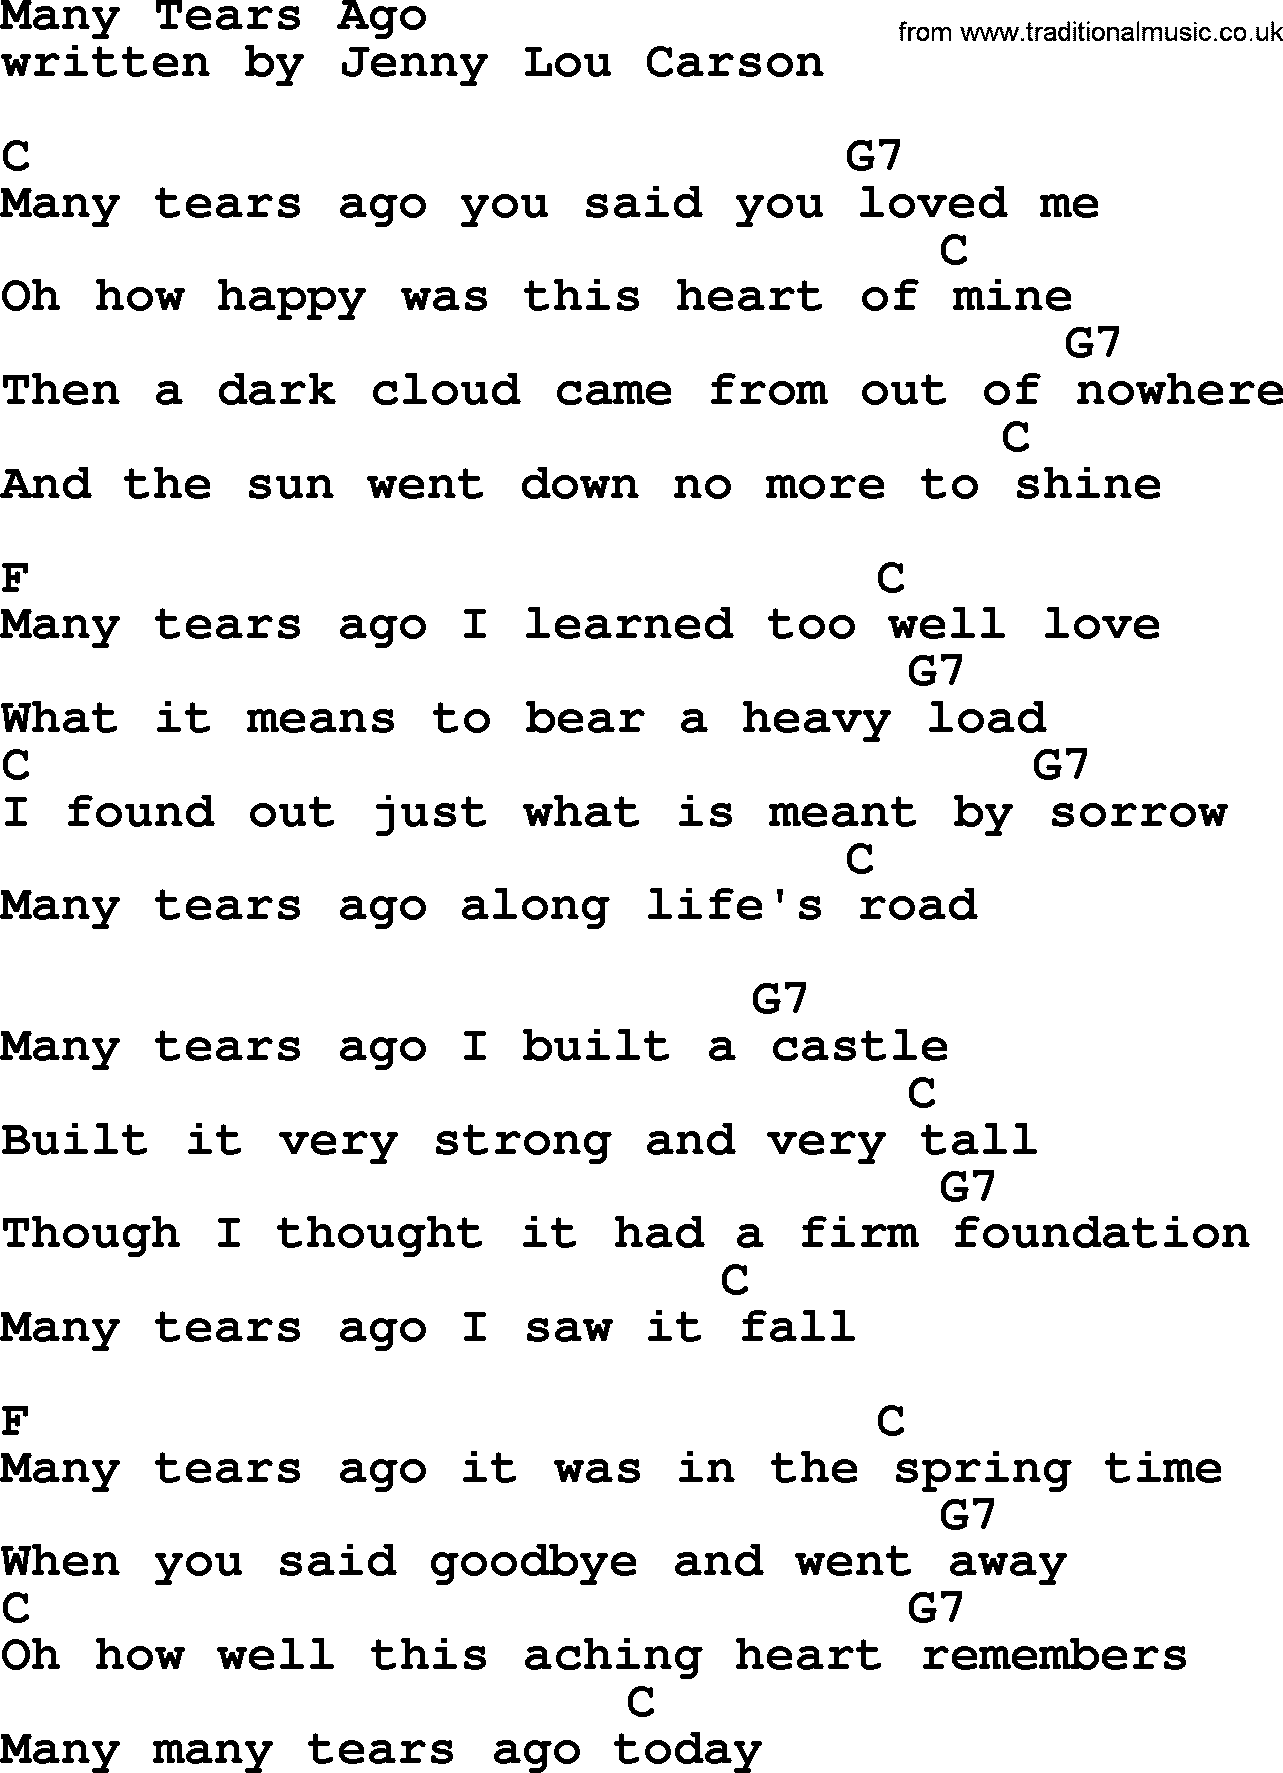 Marty Robbins song: Many Tears Ago, lyrics and chords